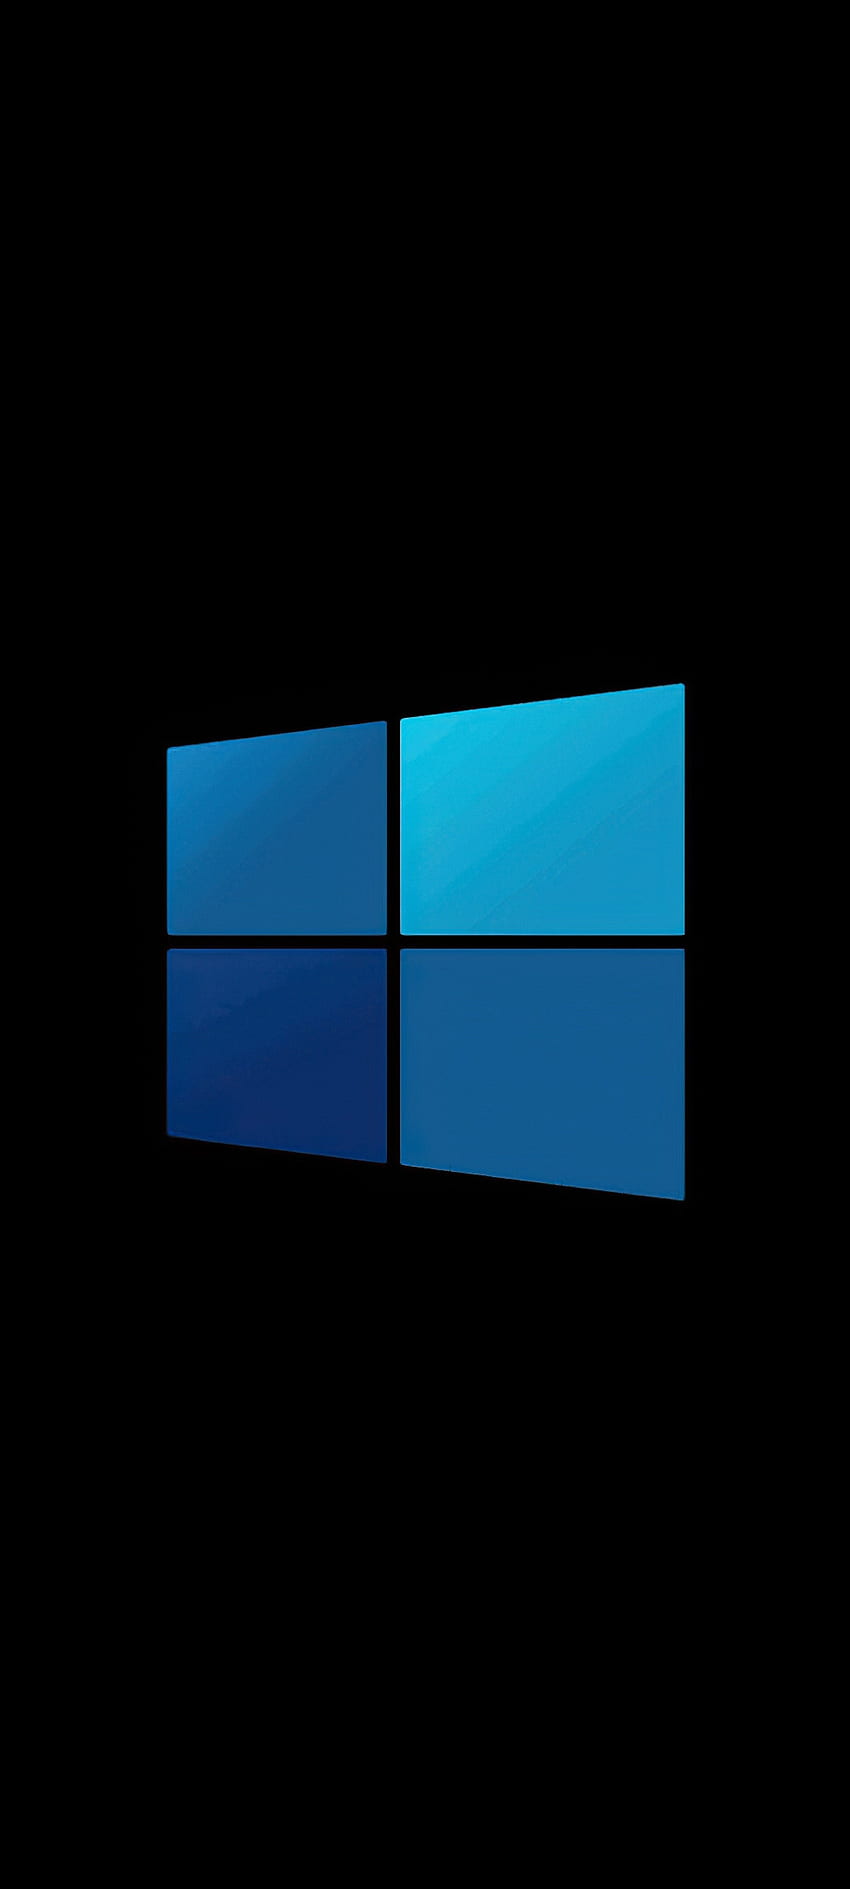 Logotipo azul de Windows, azul eléctrico, amoled, diseño, negro, oled, tecnología, microsoft fondo de pantalla del teléfono